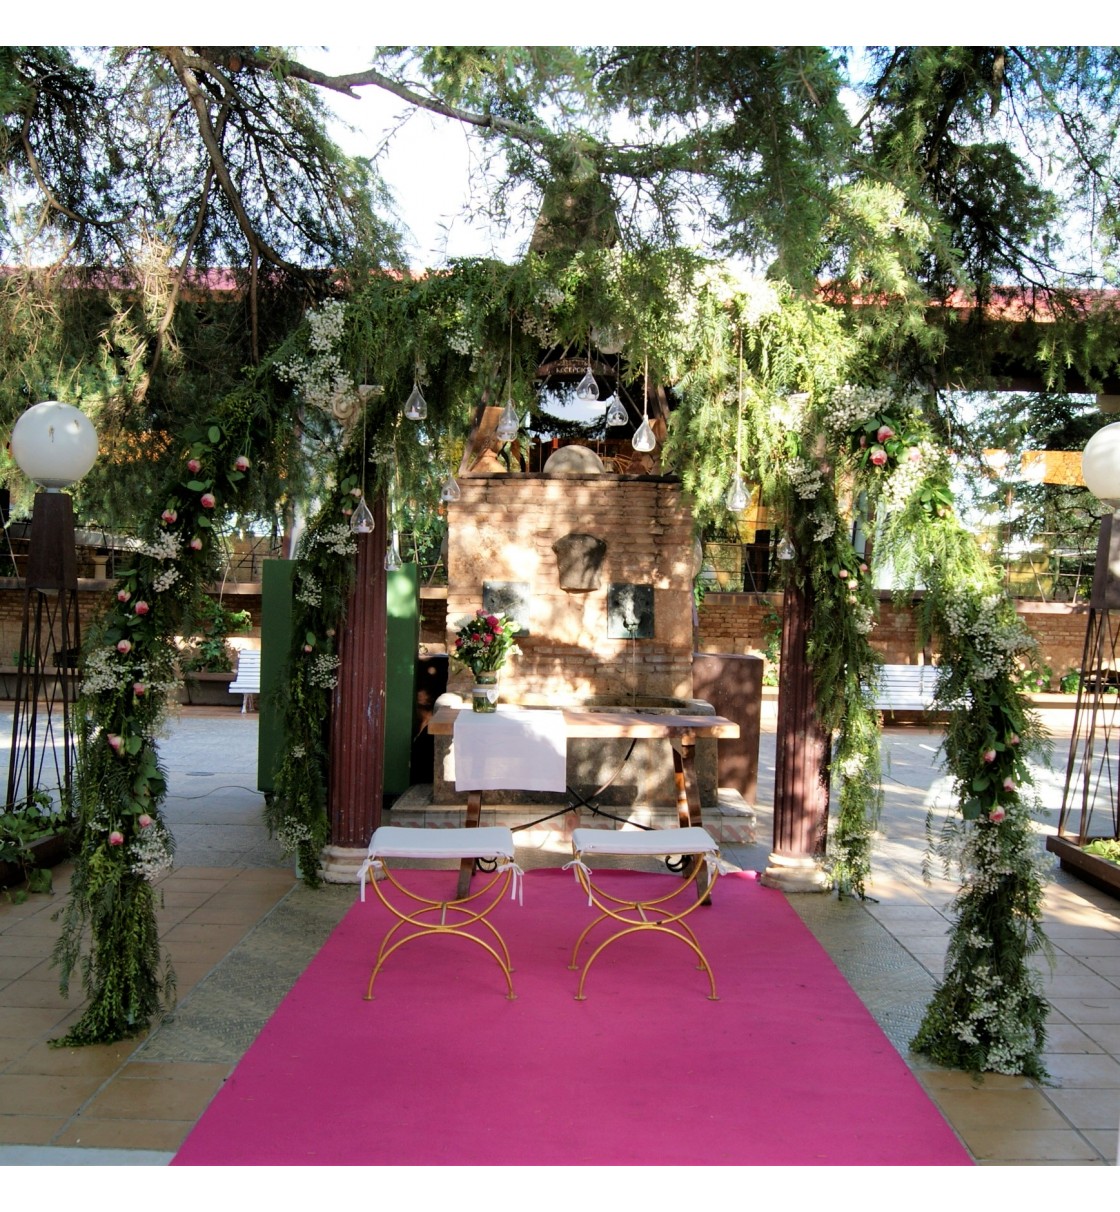 Arco floral para ceremonia civil con verdes, paniculata y rosa ramificada